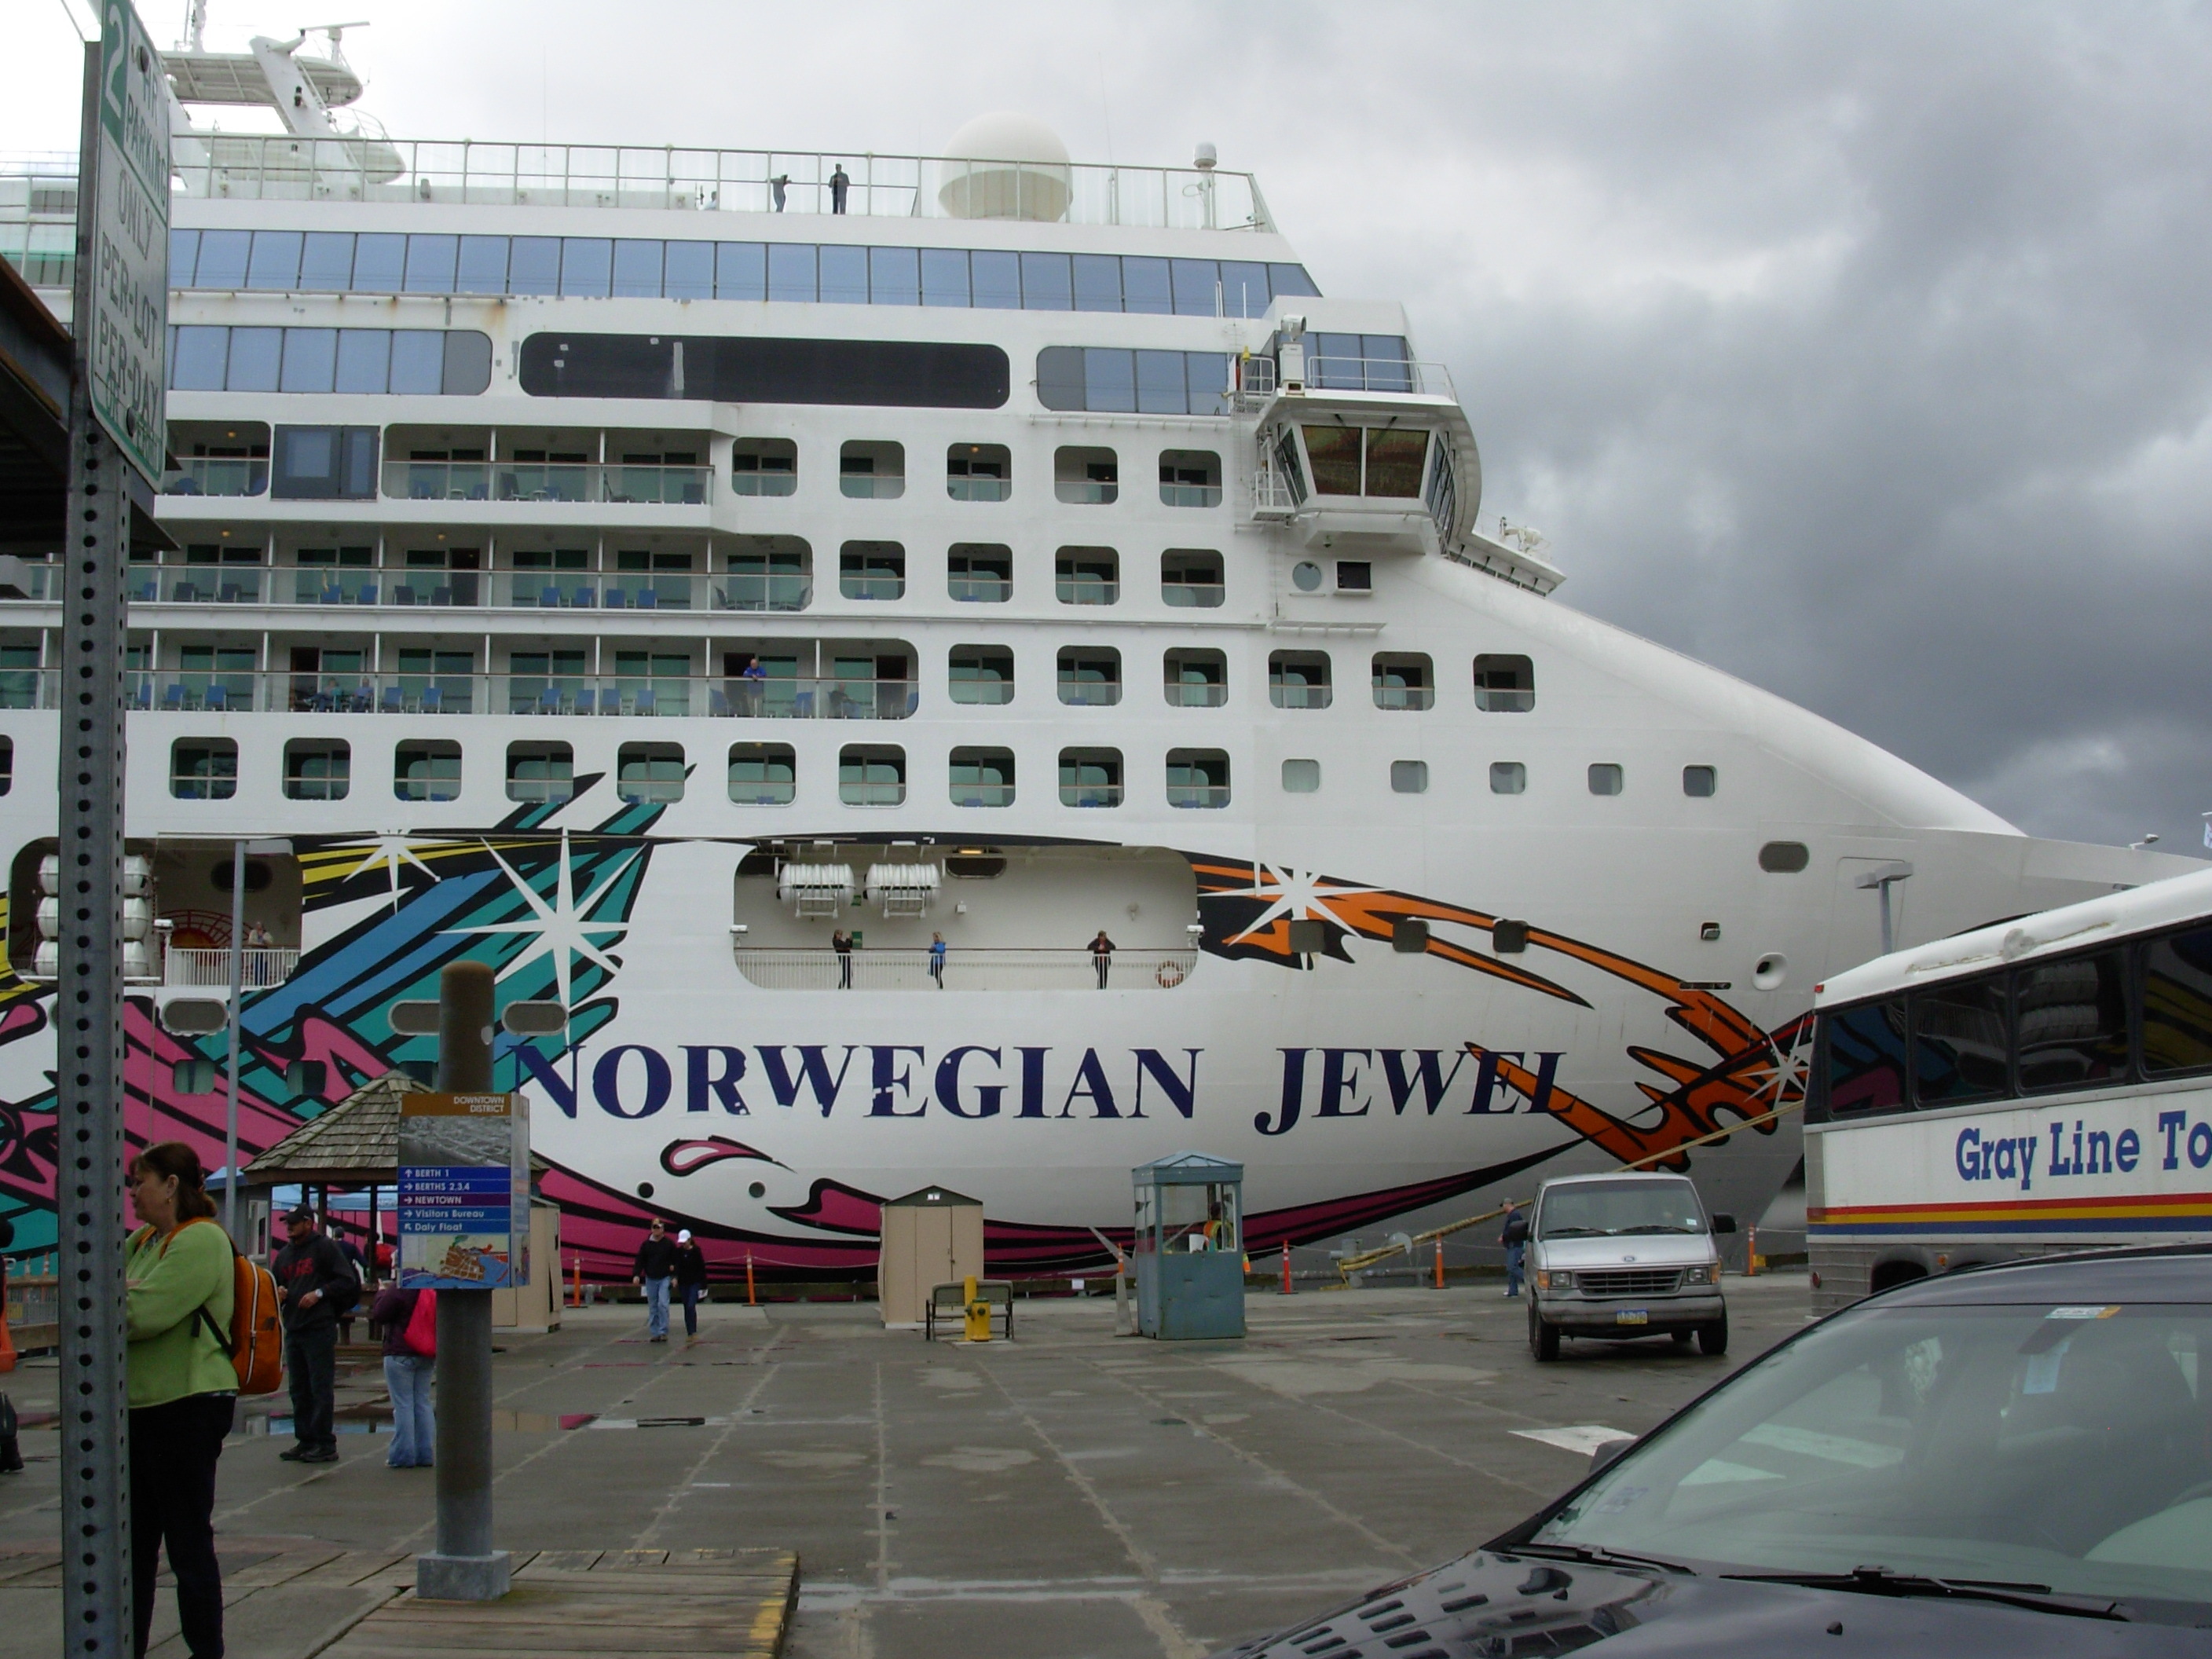 reviews for norwegian jewel cruise line